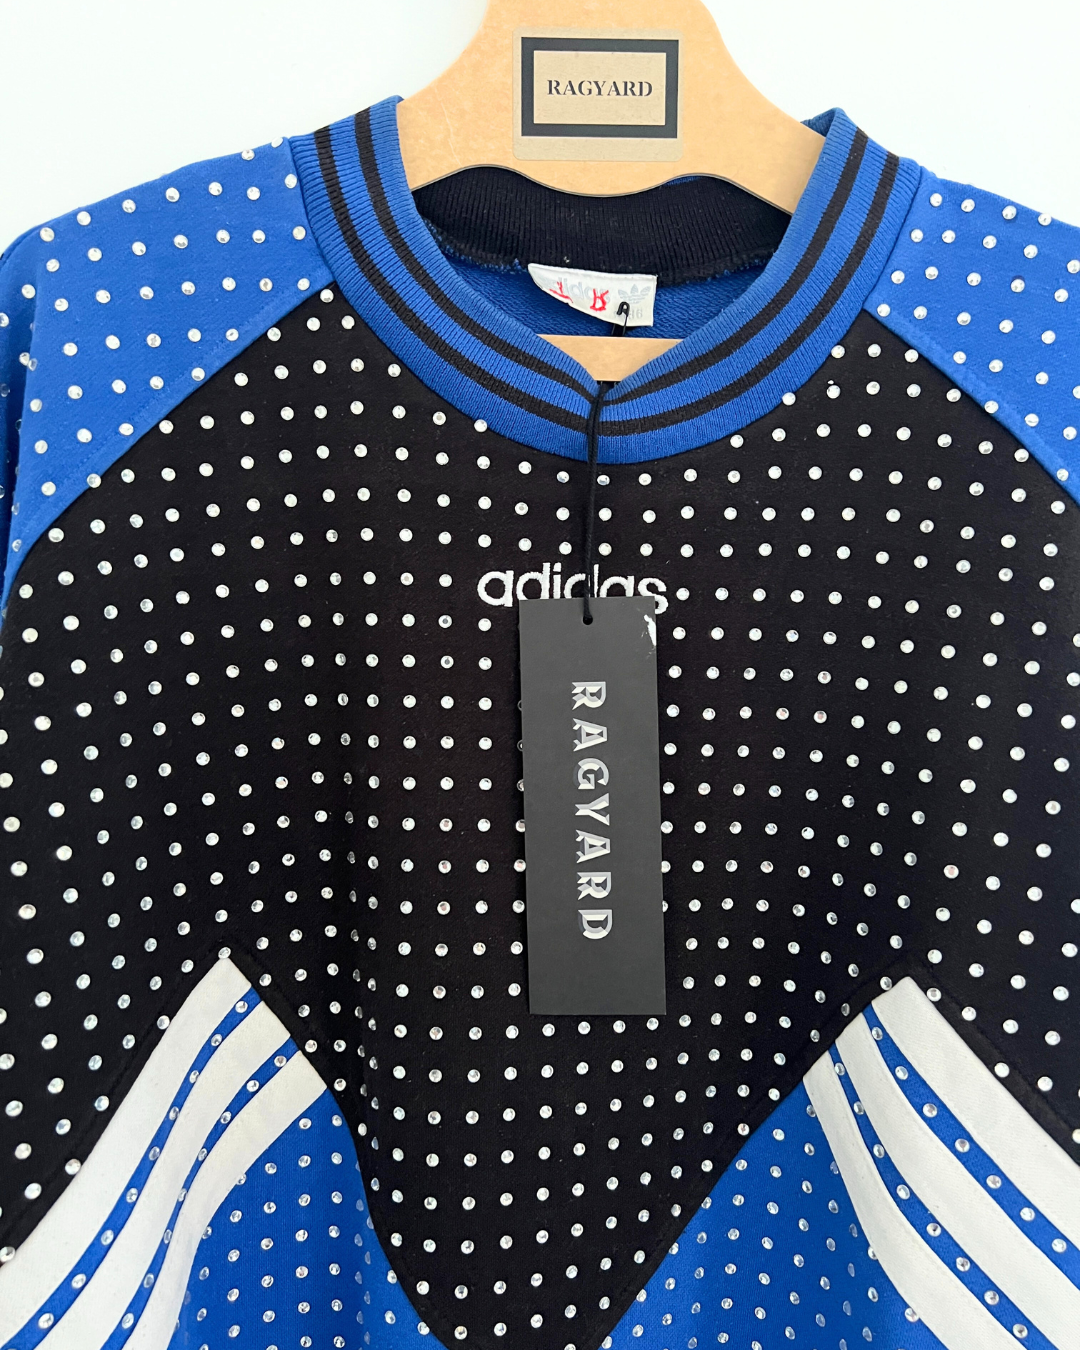 Vintage Blue & Black ADIDAS Sweatshirt with all over diamante studs